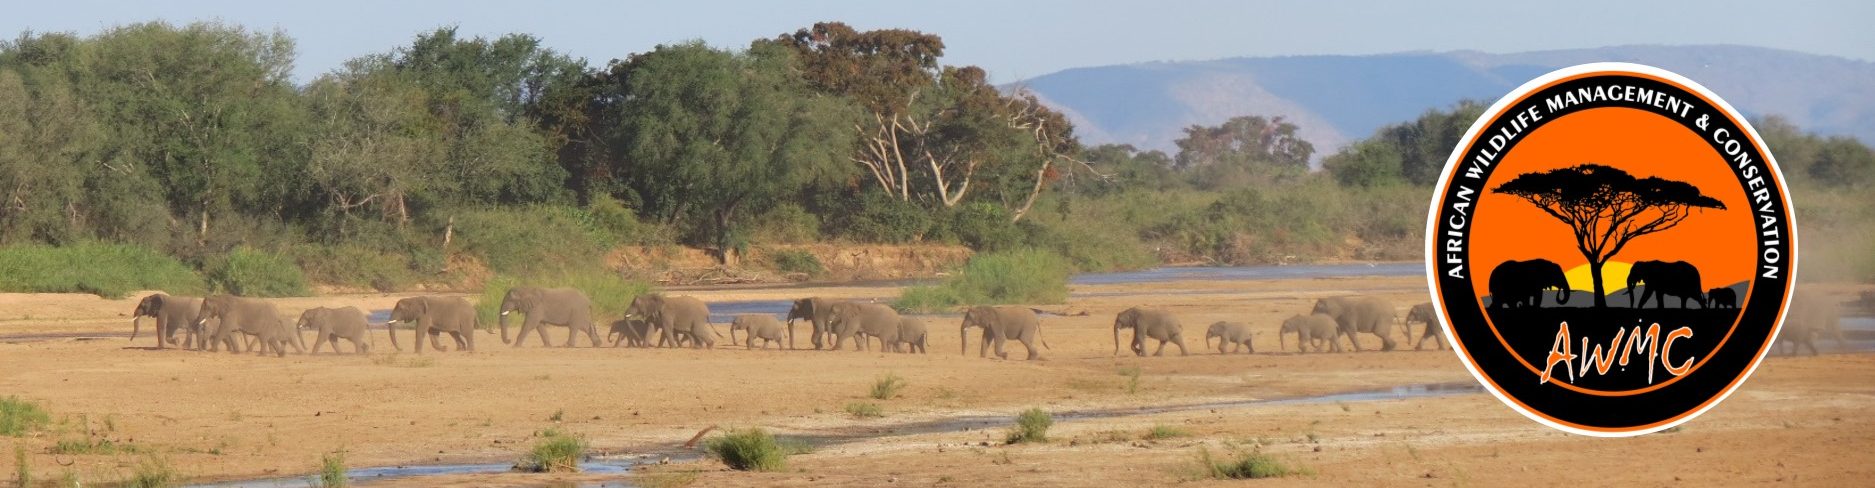 African Wildlife Management & Conservation